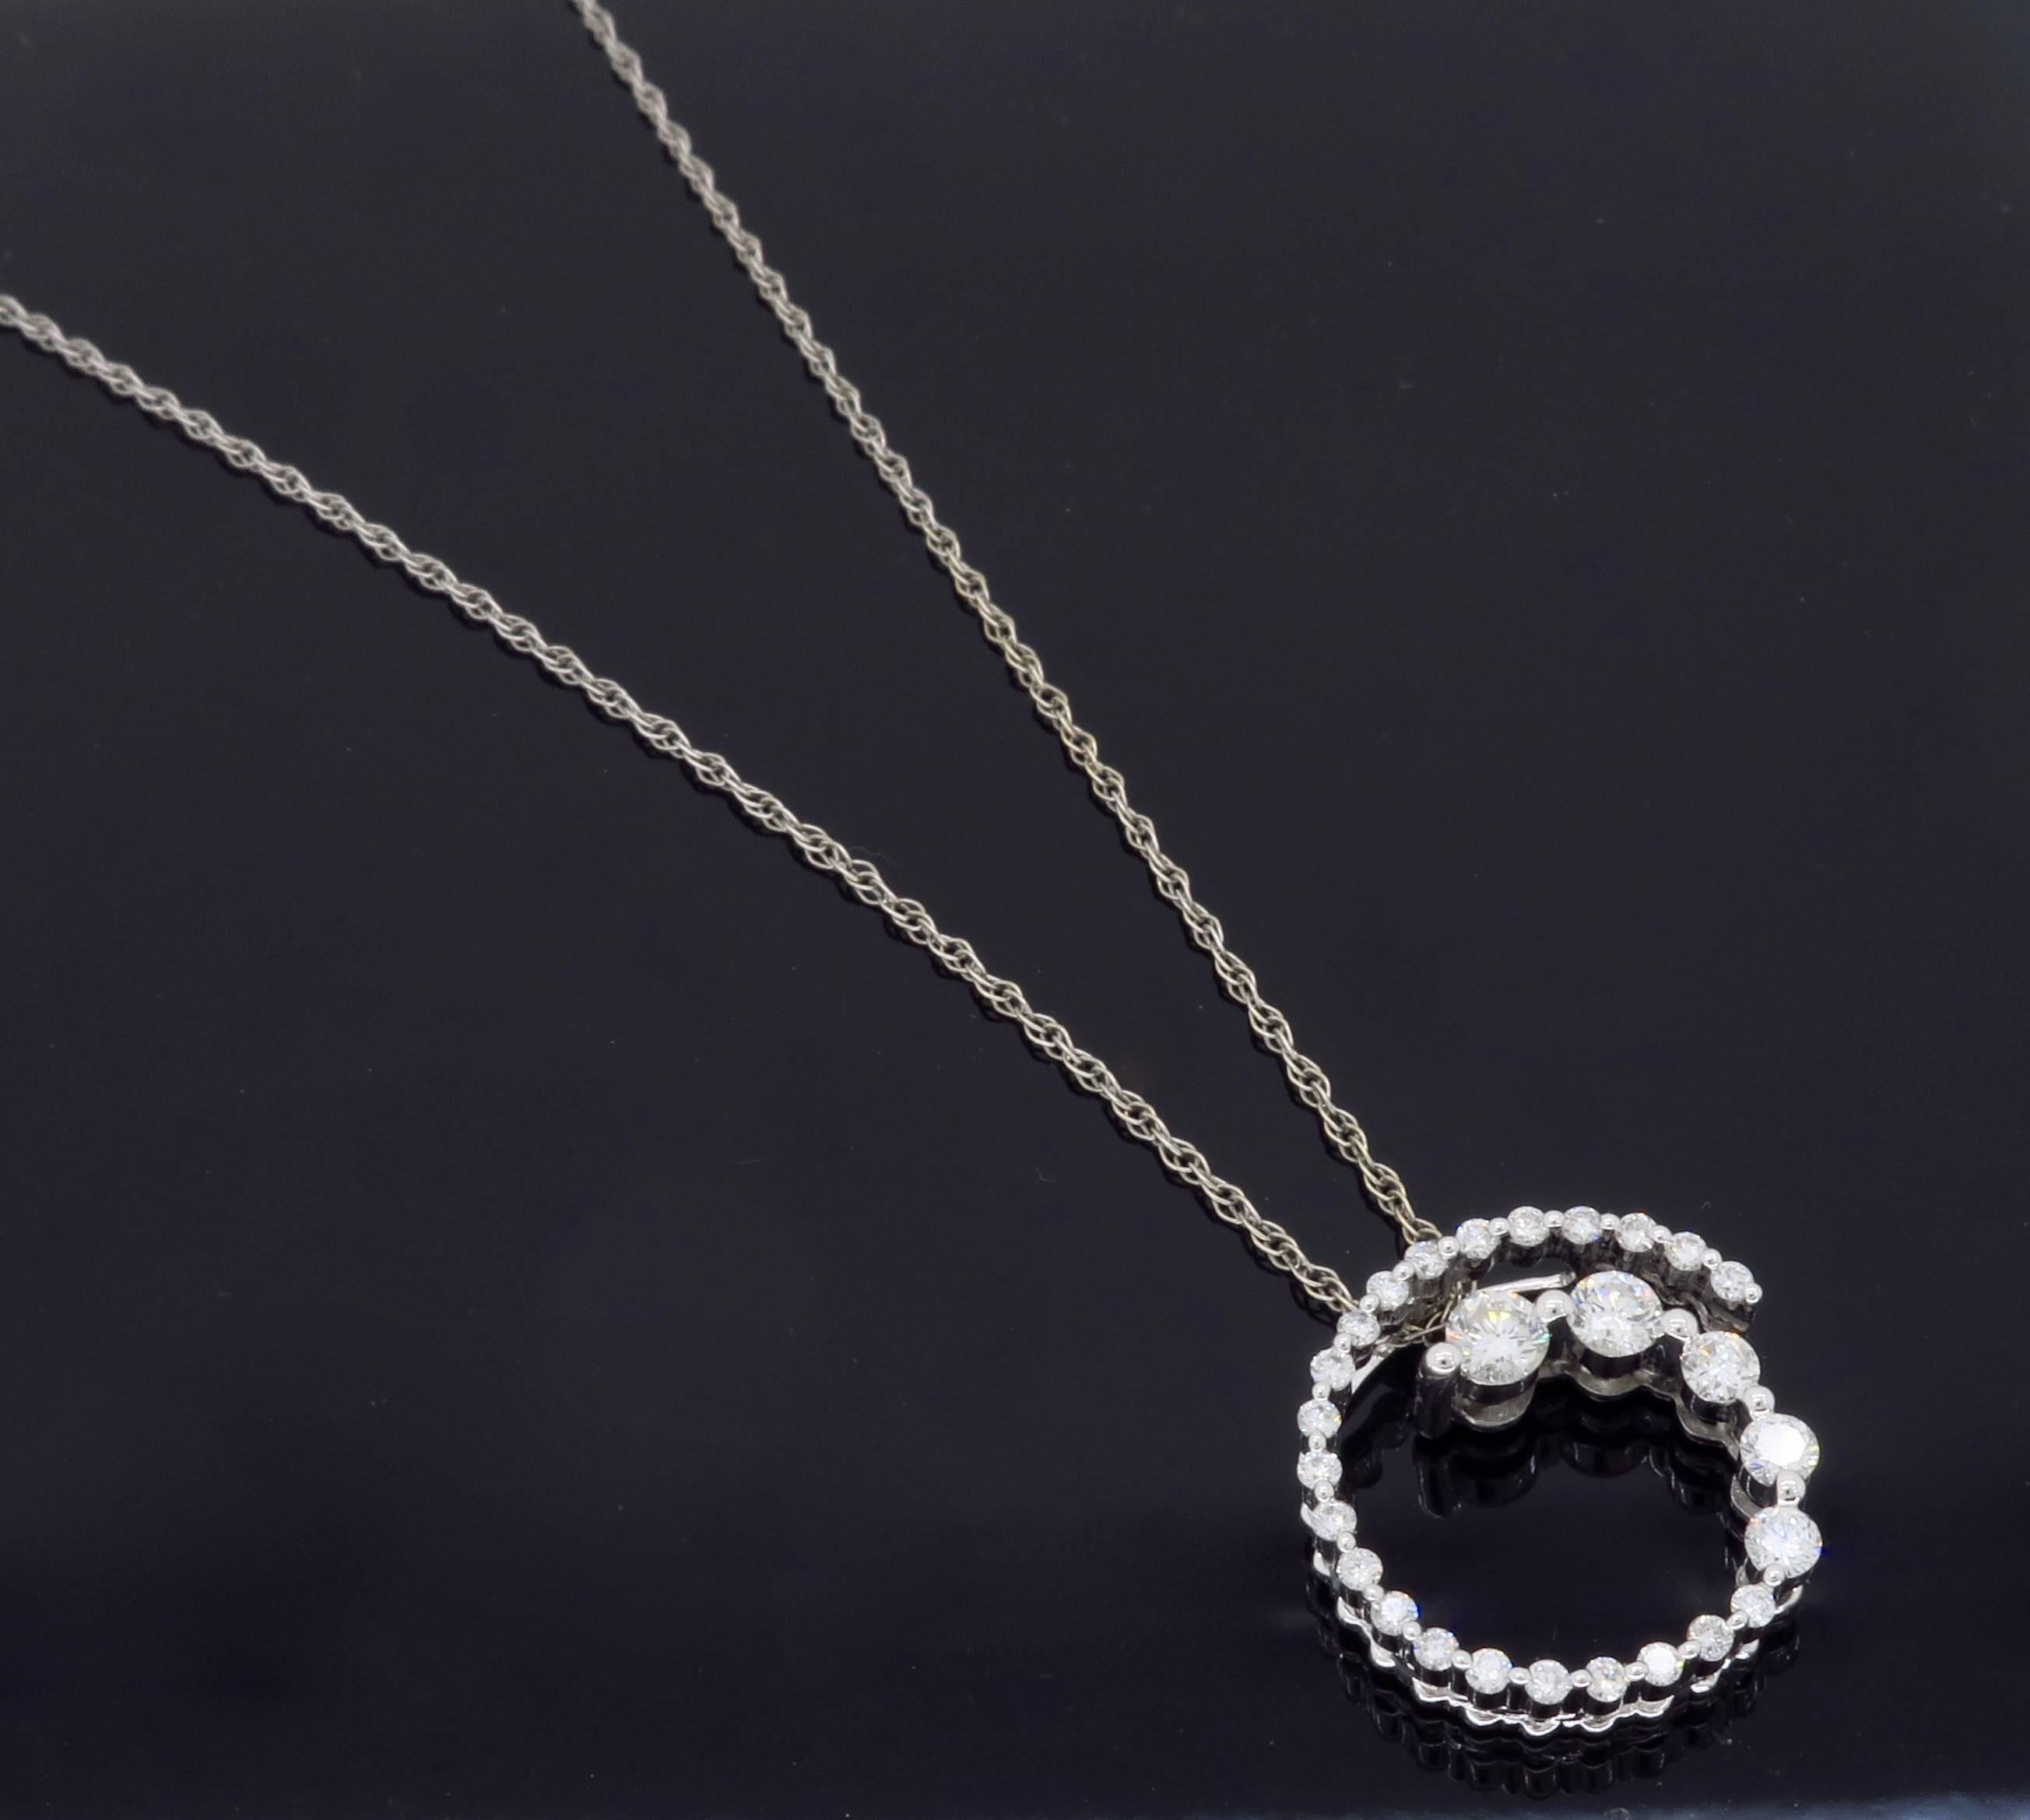  Diamond White Gold Pendant Chain Necklace  5